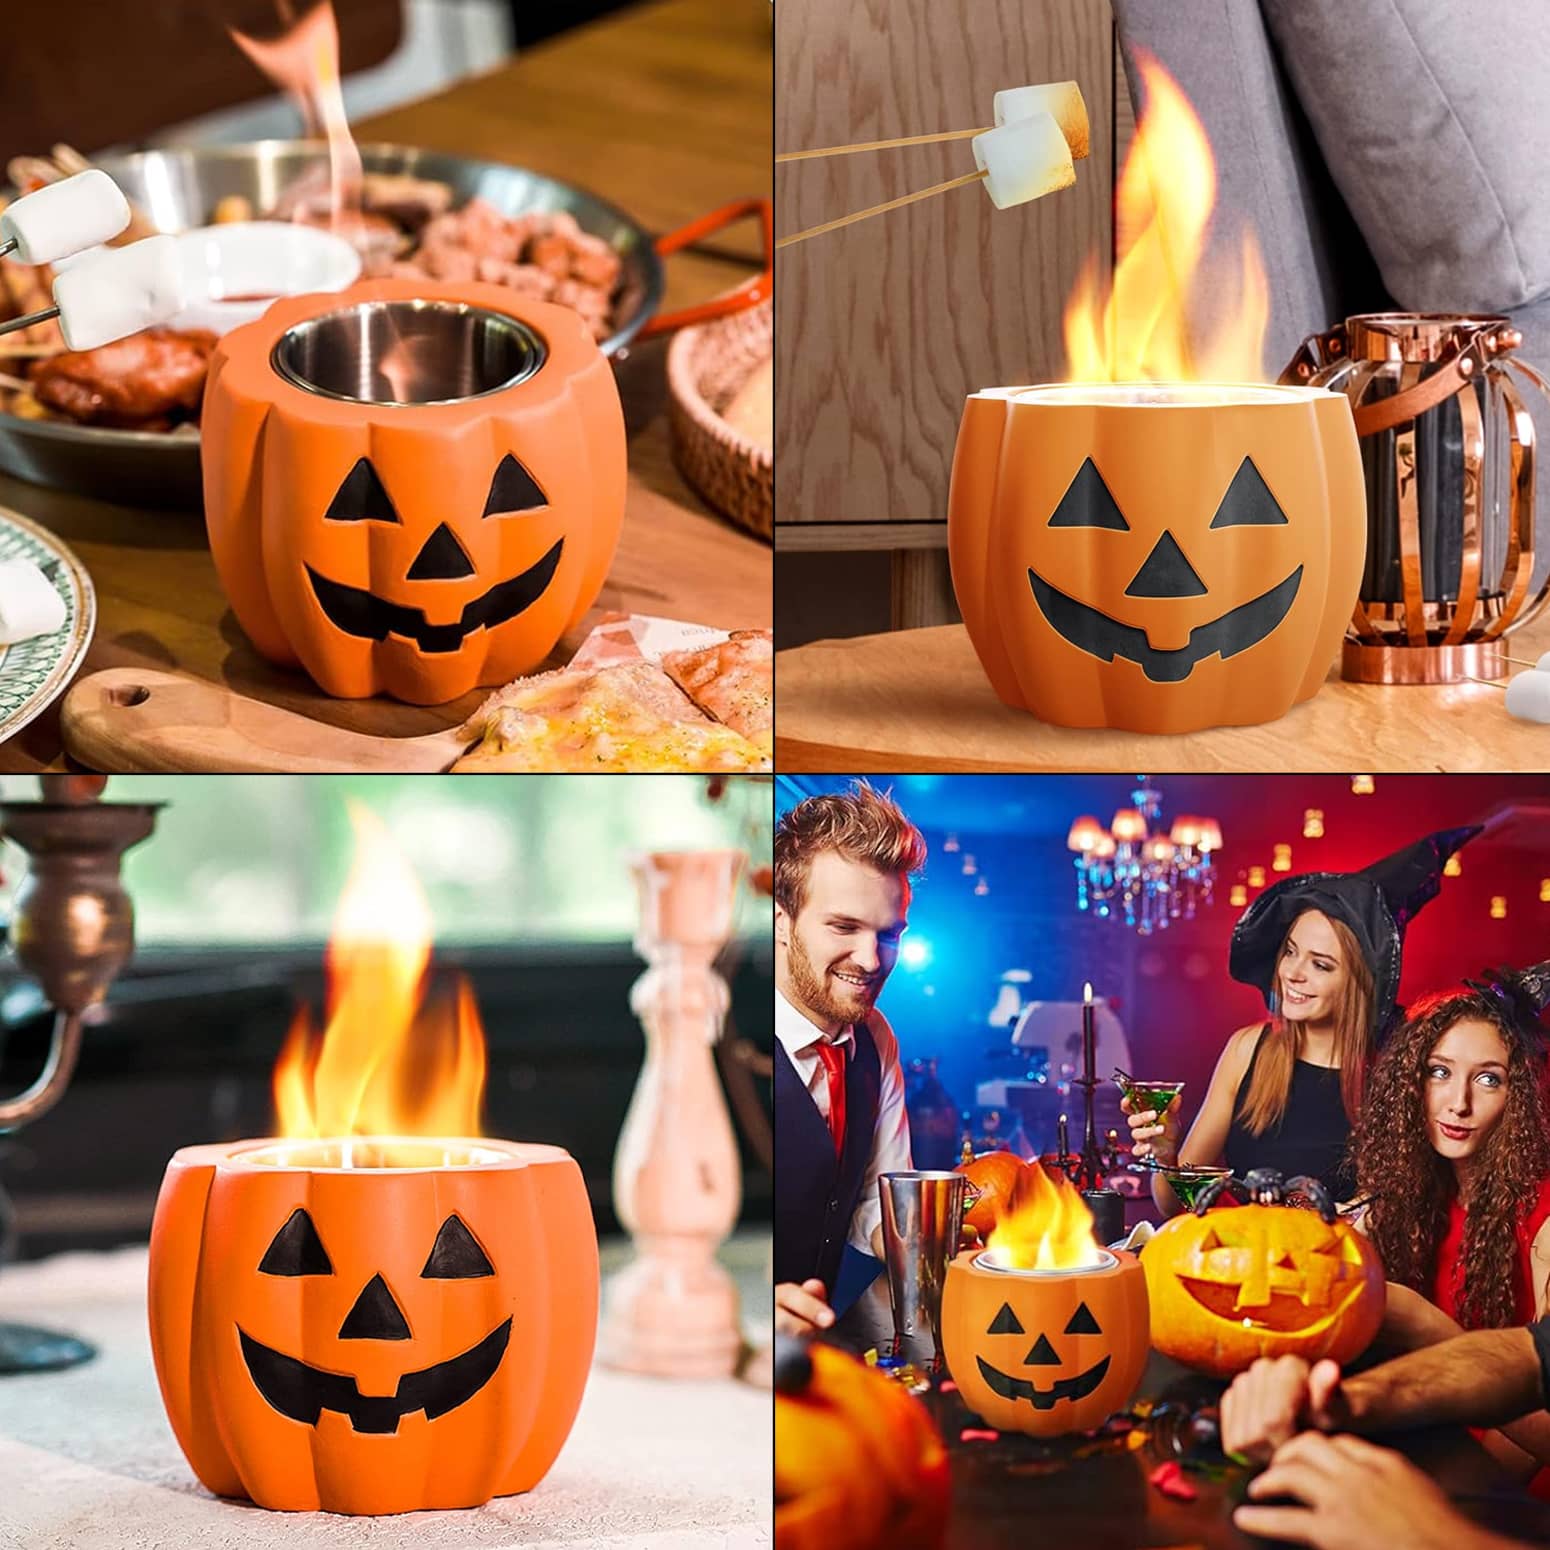 Pumpkin Jack-O'-Lantern Smokeless Indoor Tabletop Fire Pit